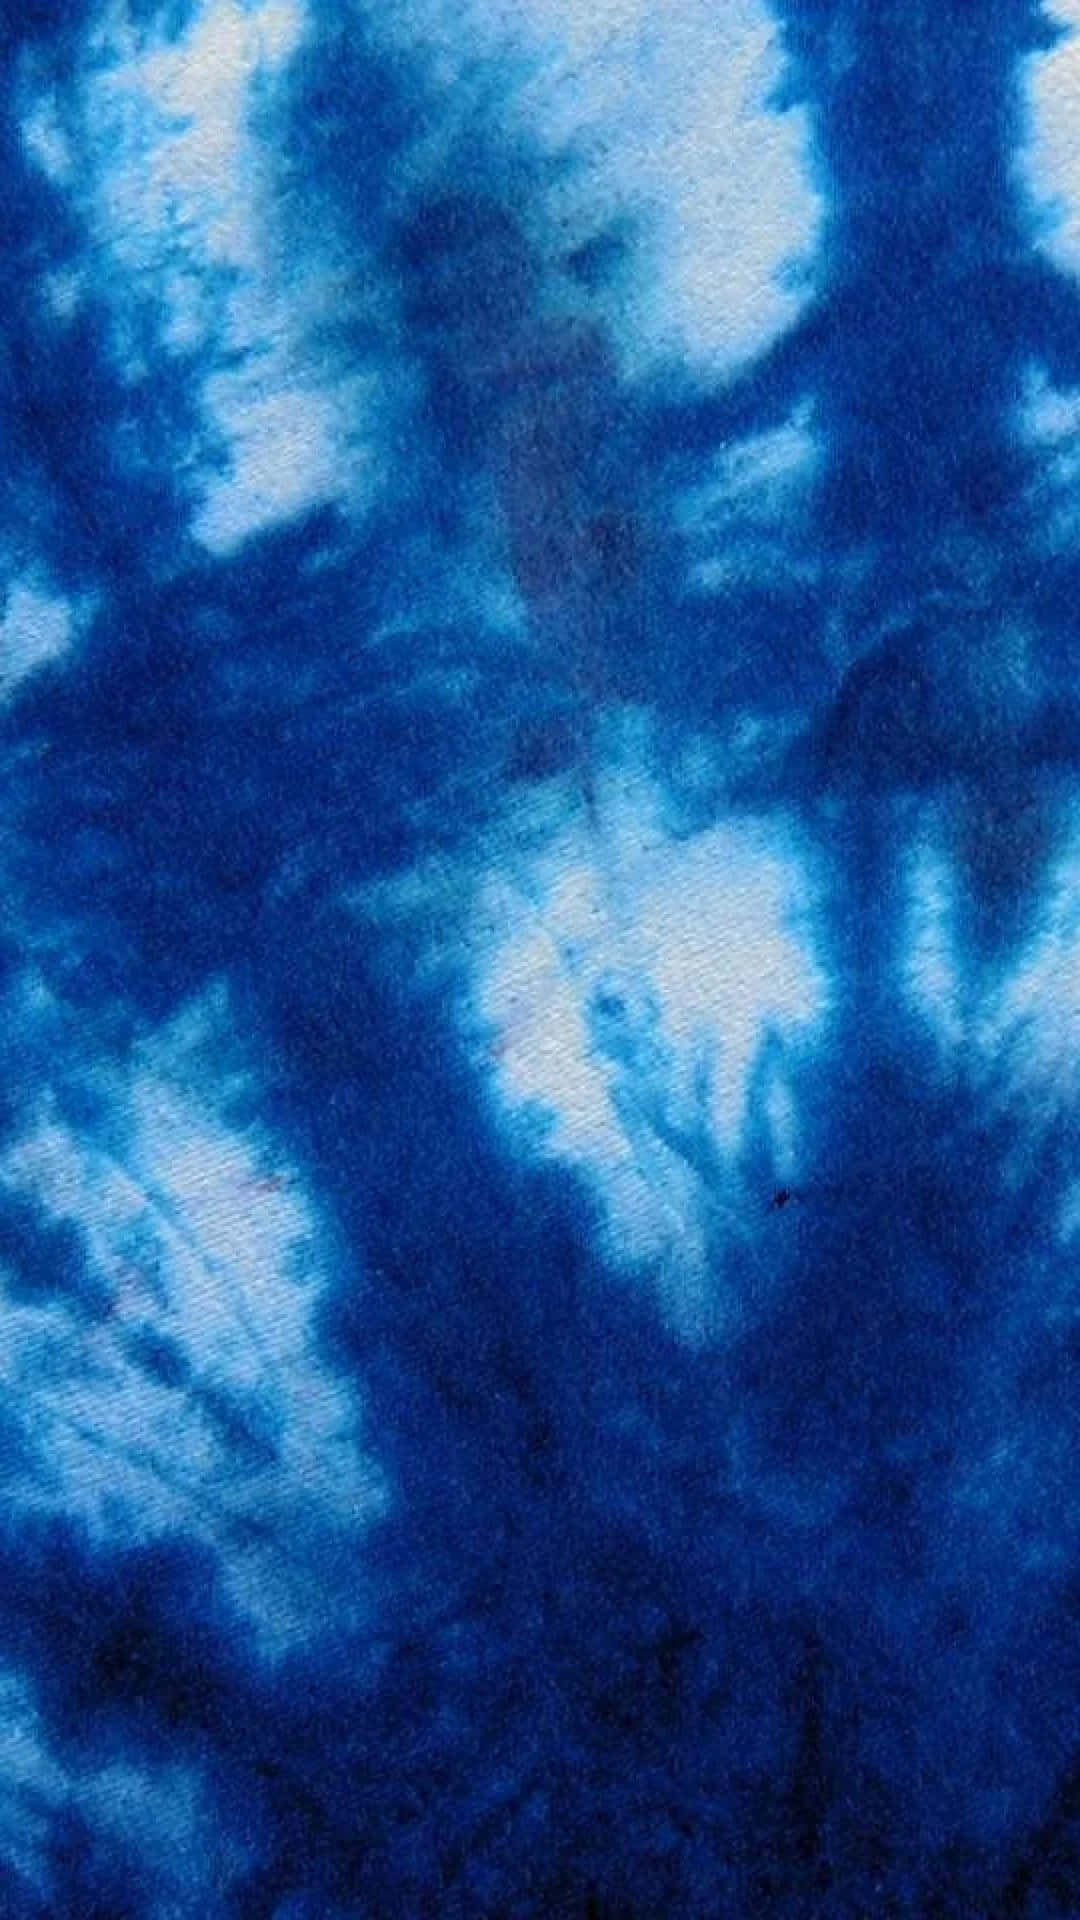 Blue Tie Dye Fabric White Spots Wallpaper